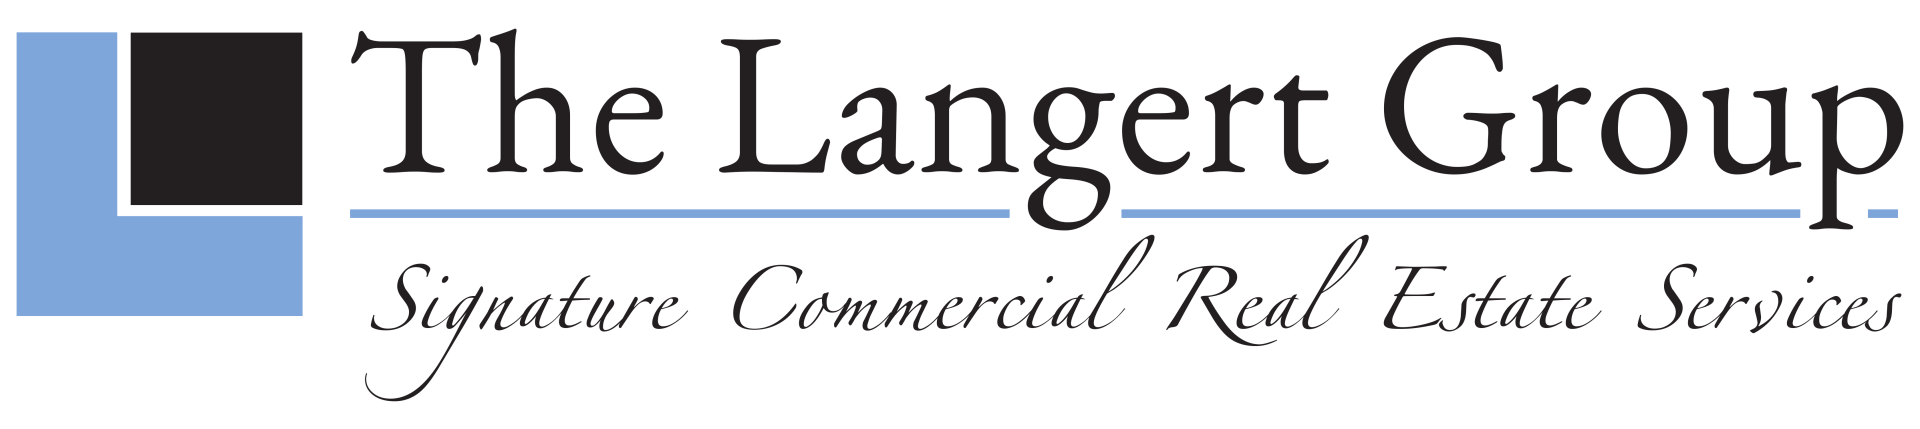 The Langert Group logo